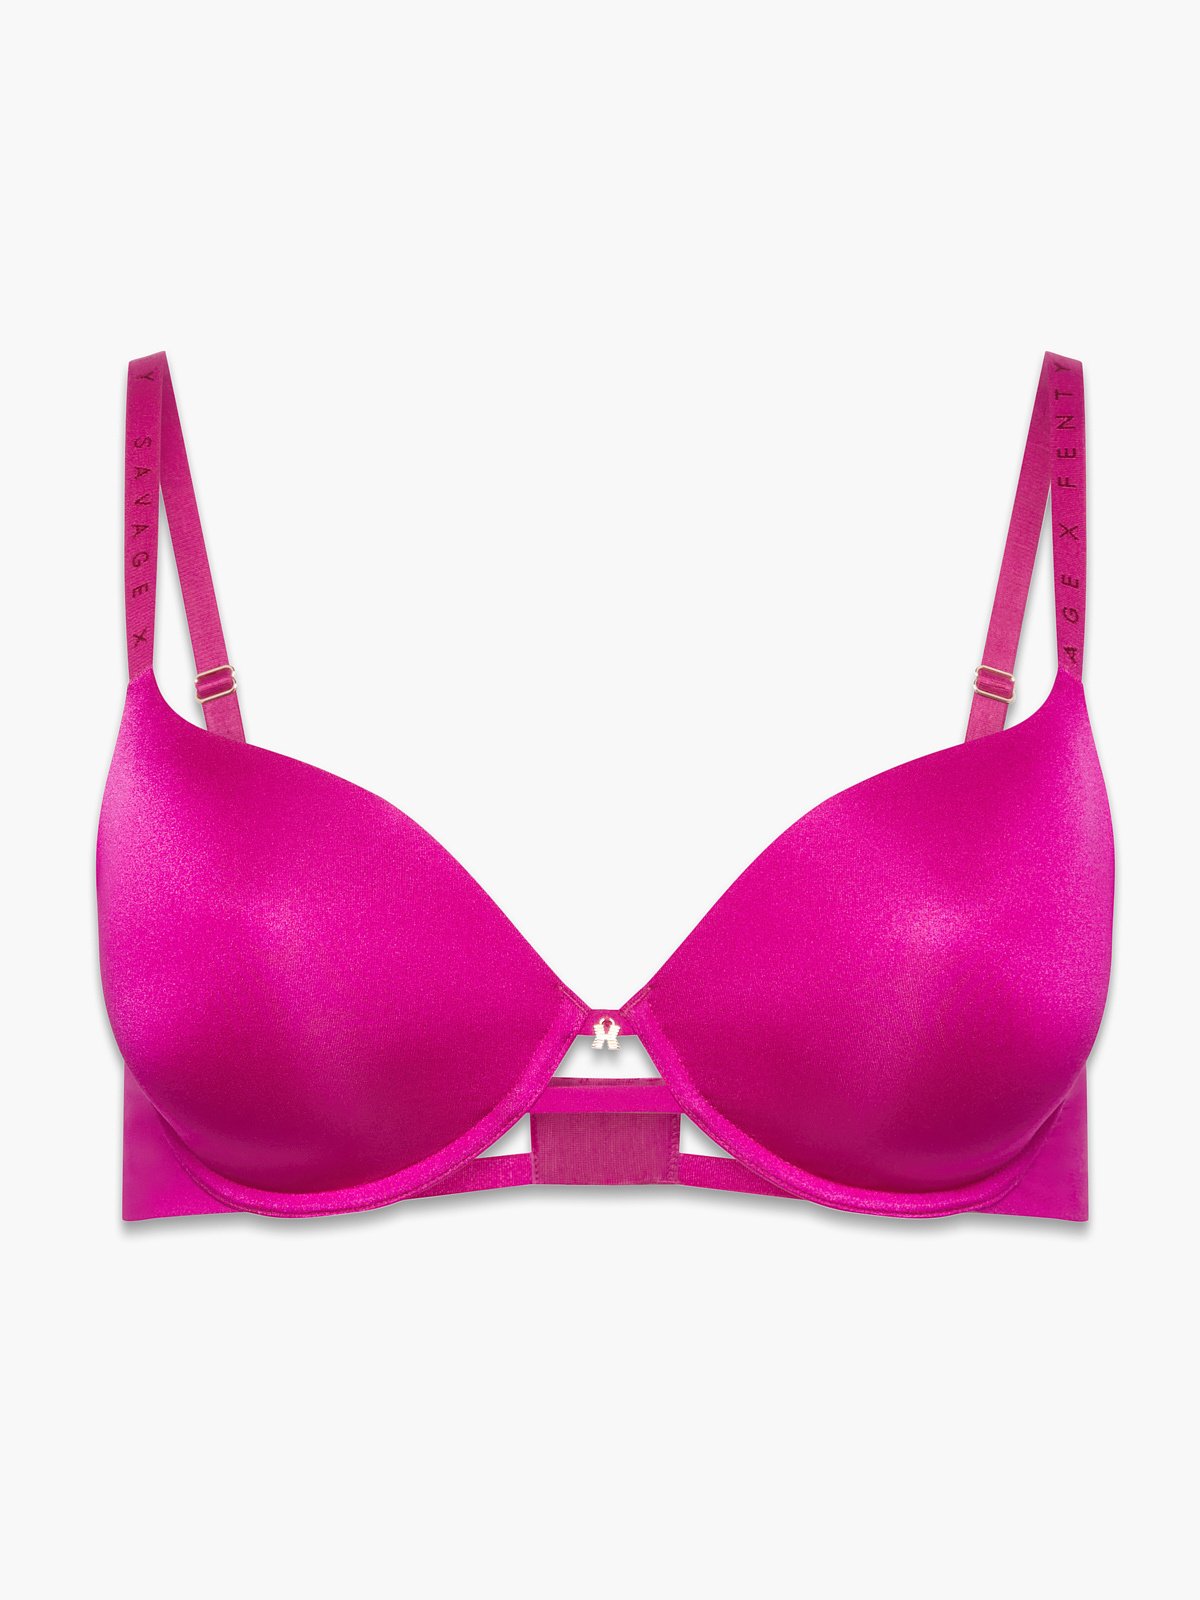 Victoria's Secret PINK Nude Bra 36C Size 36 C - $7 (83% Off Retail